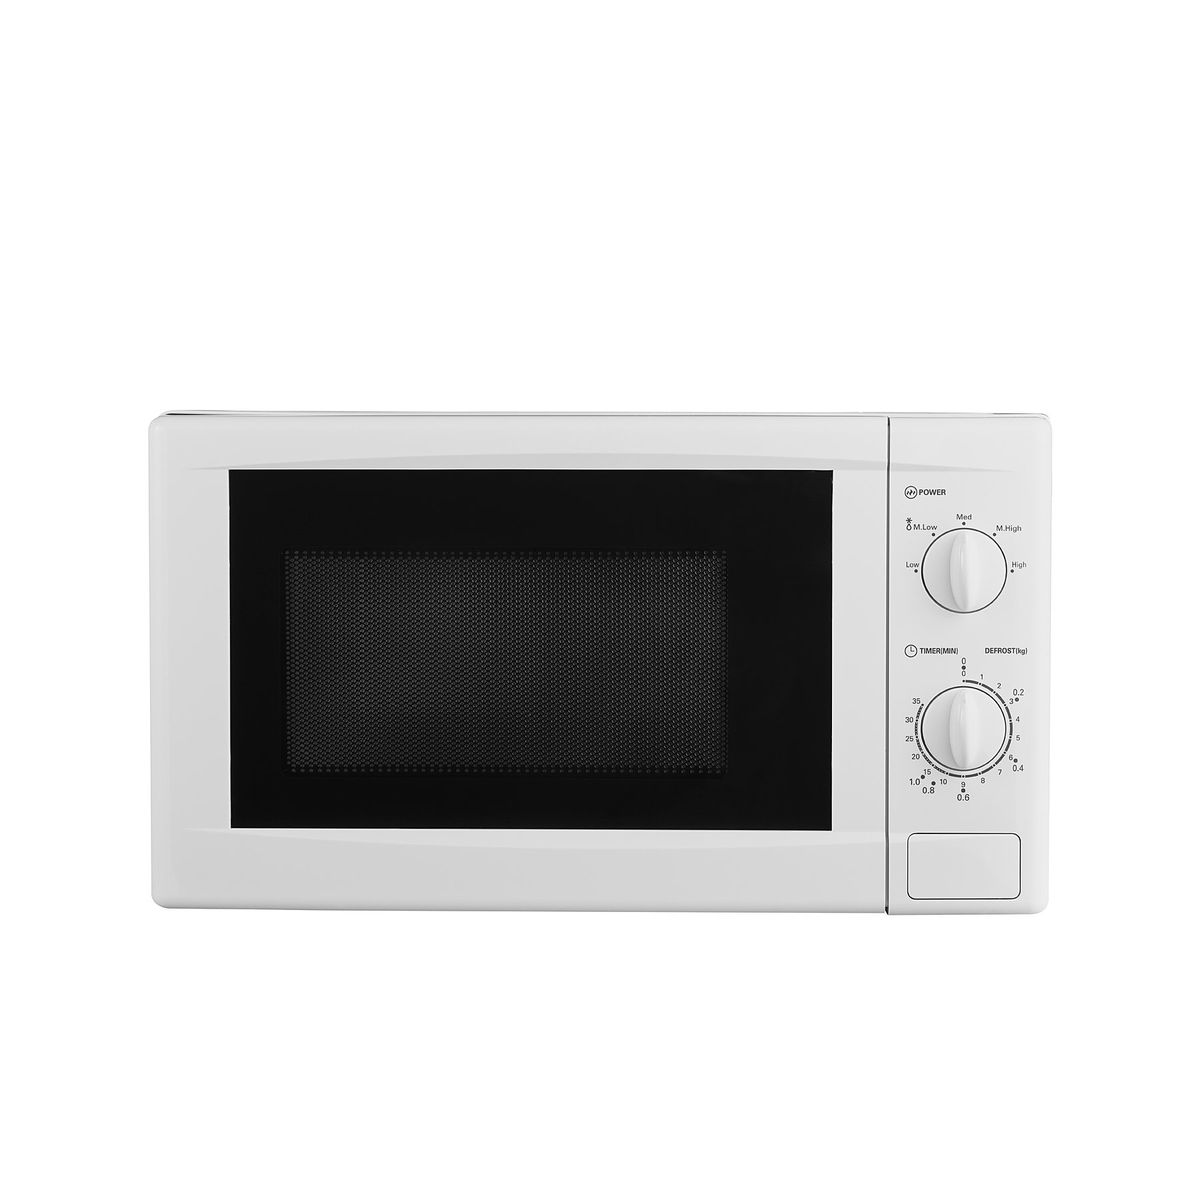 Goldair GMO-20 Microwave Oven - White (20L)